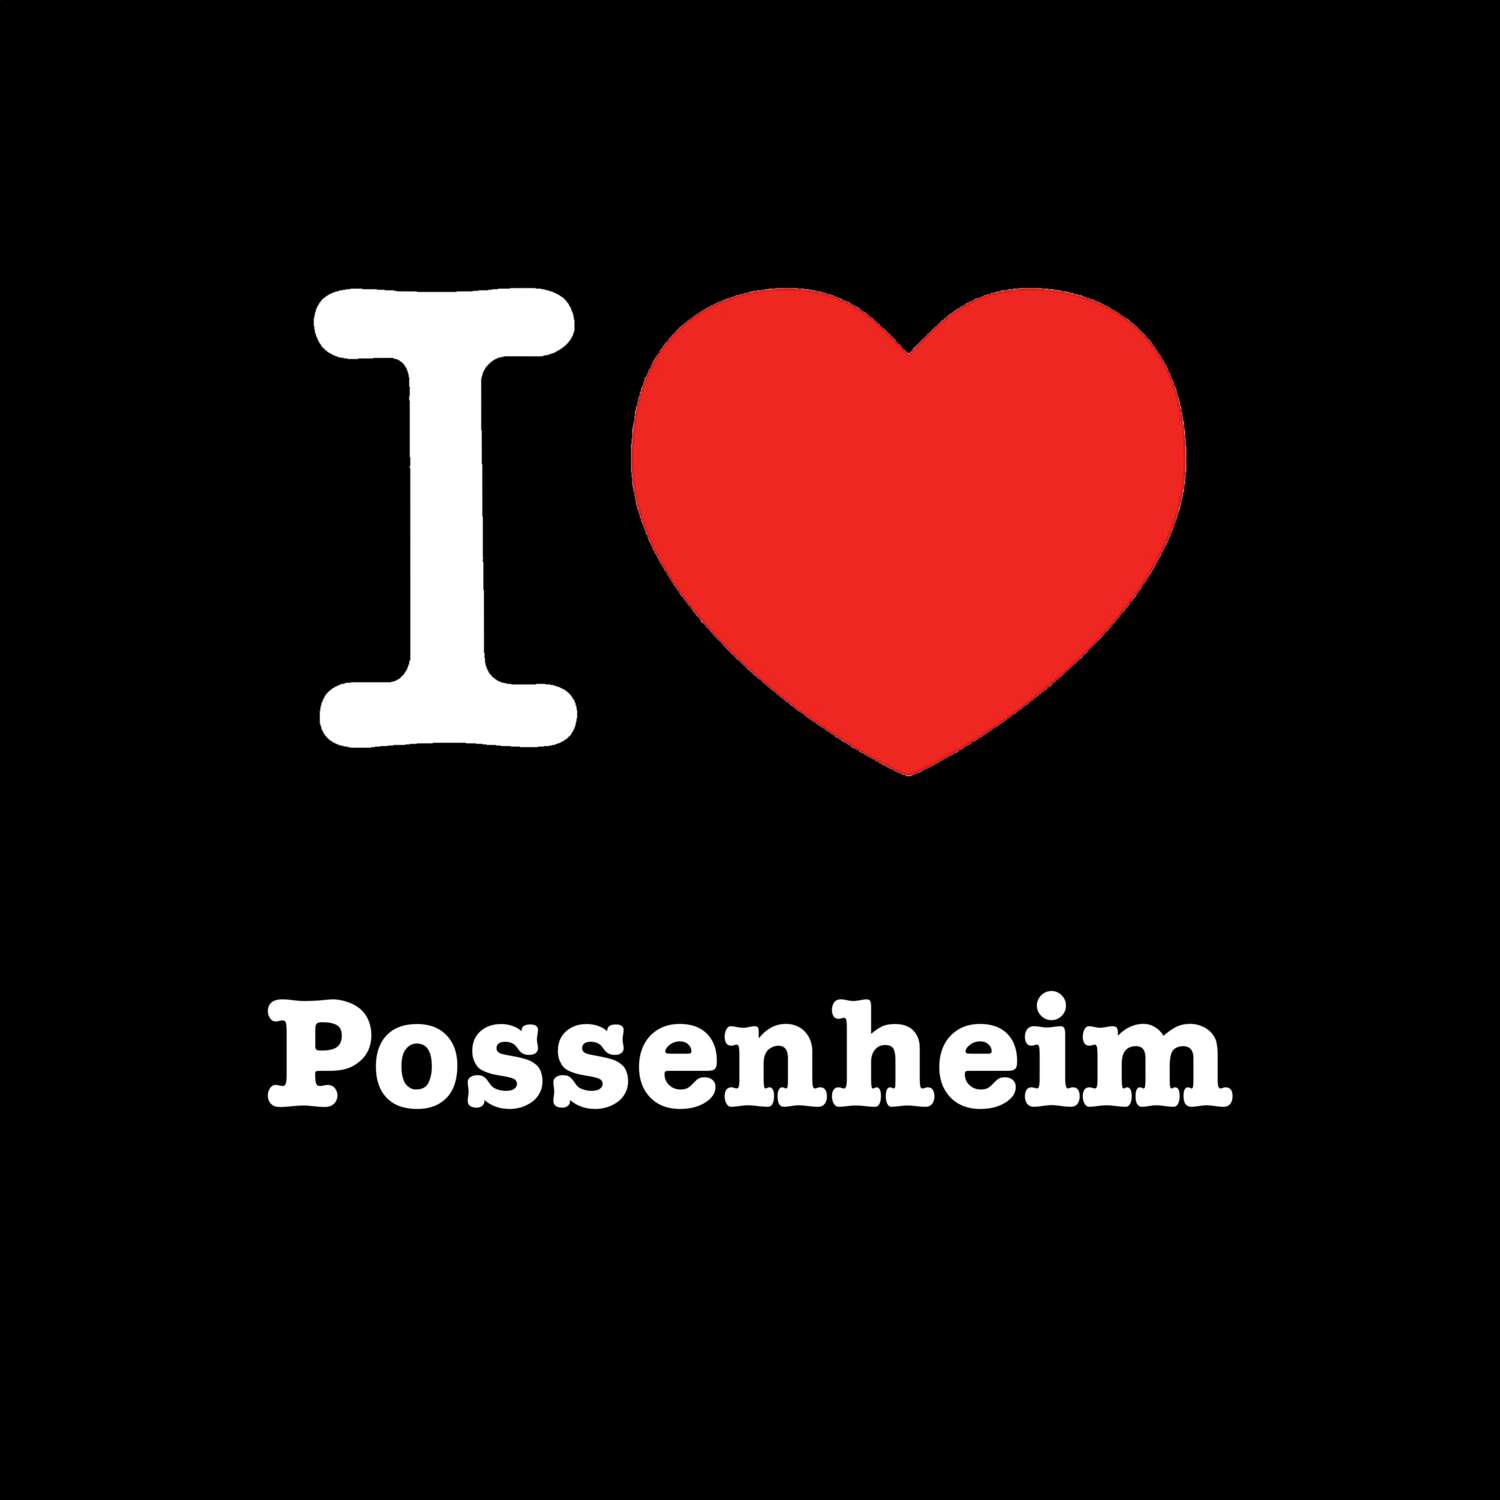 Possenheim T-Shirt »I love«